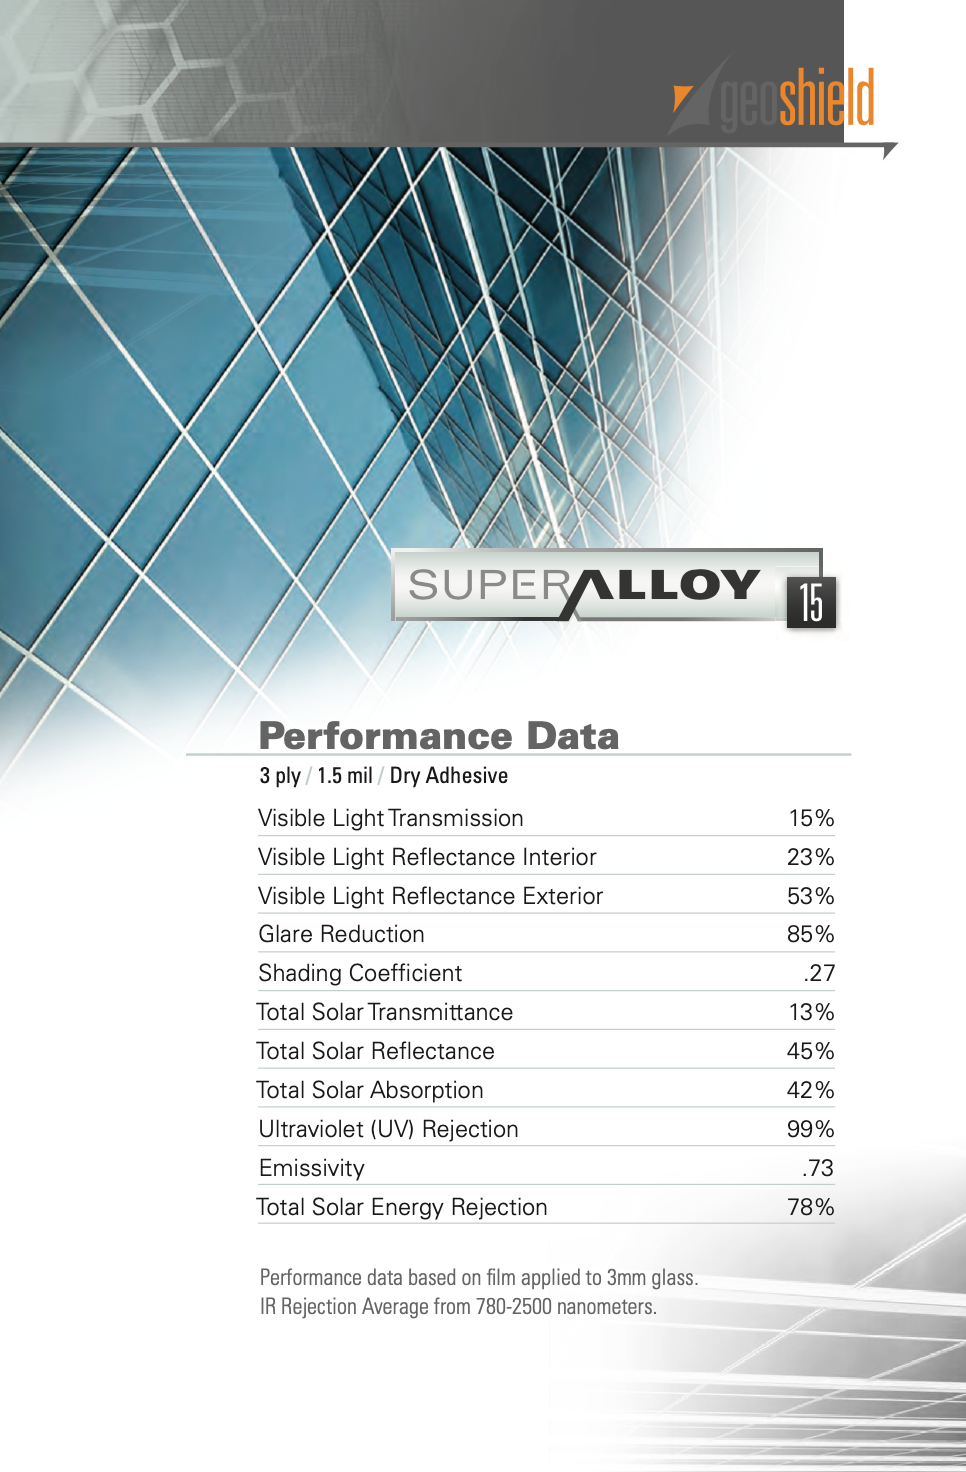 Performance data for Super Alloy 15%